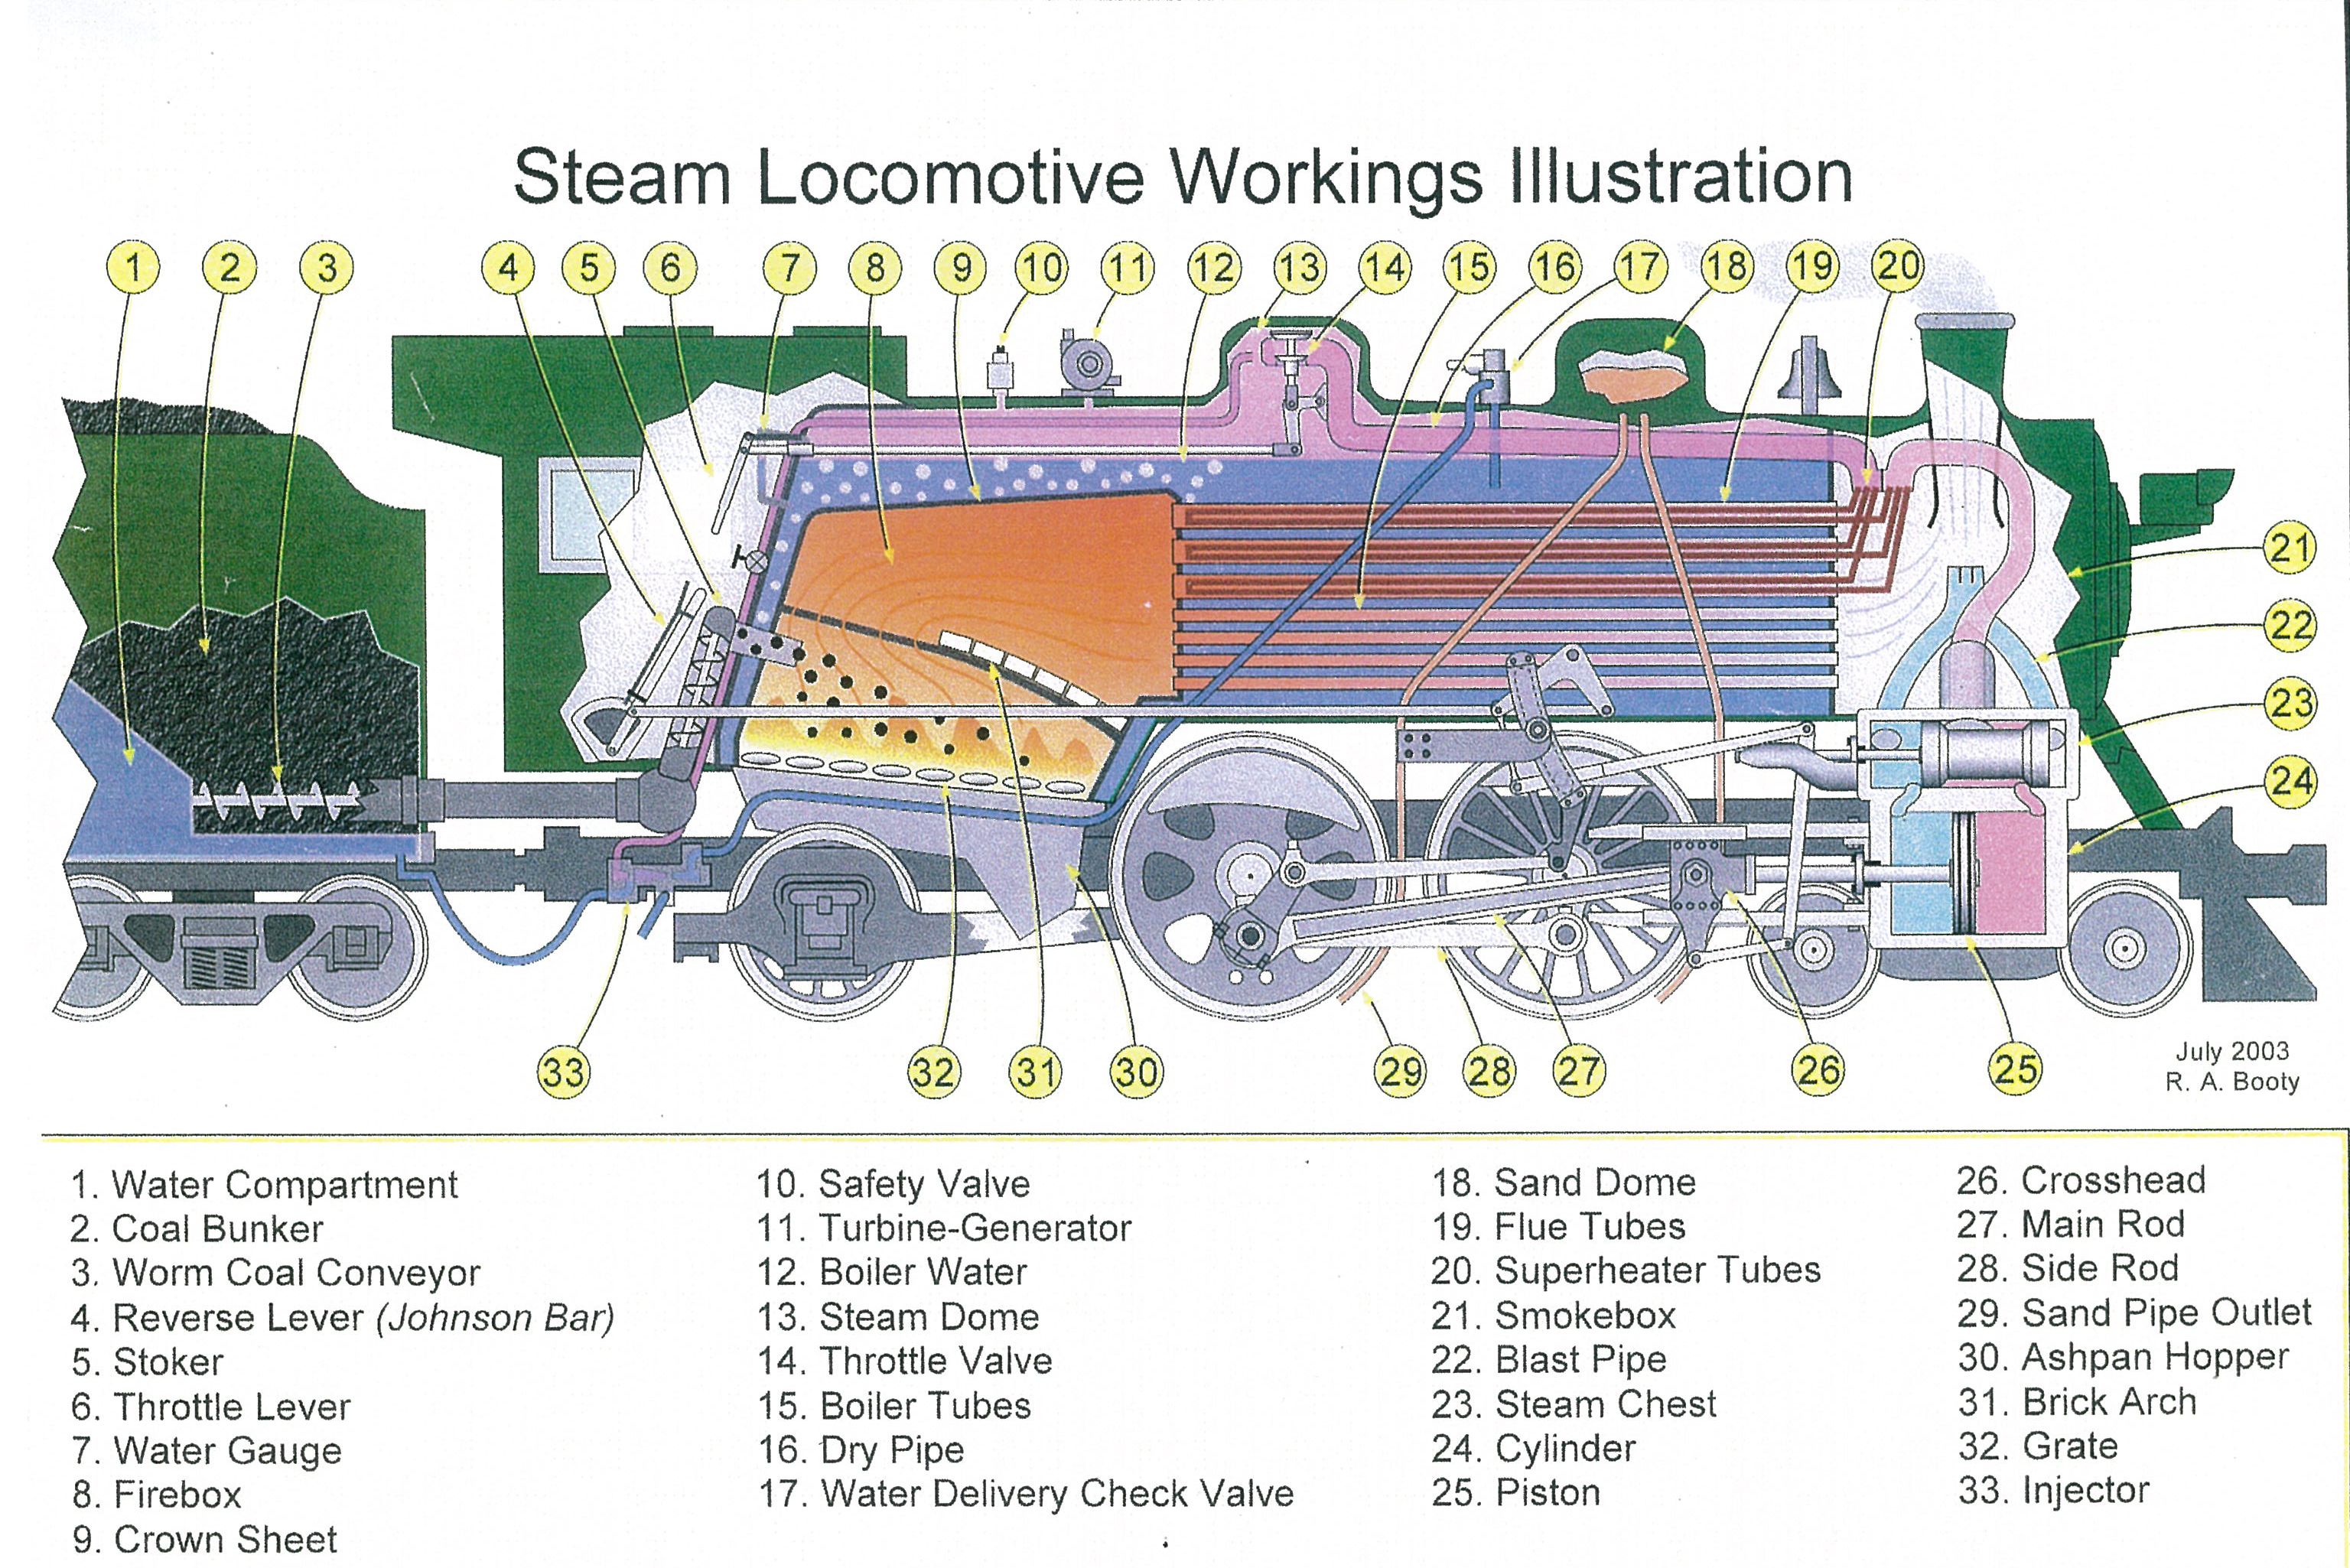 How do steam locomotives work?